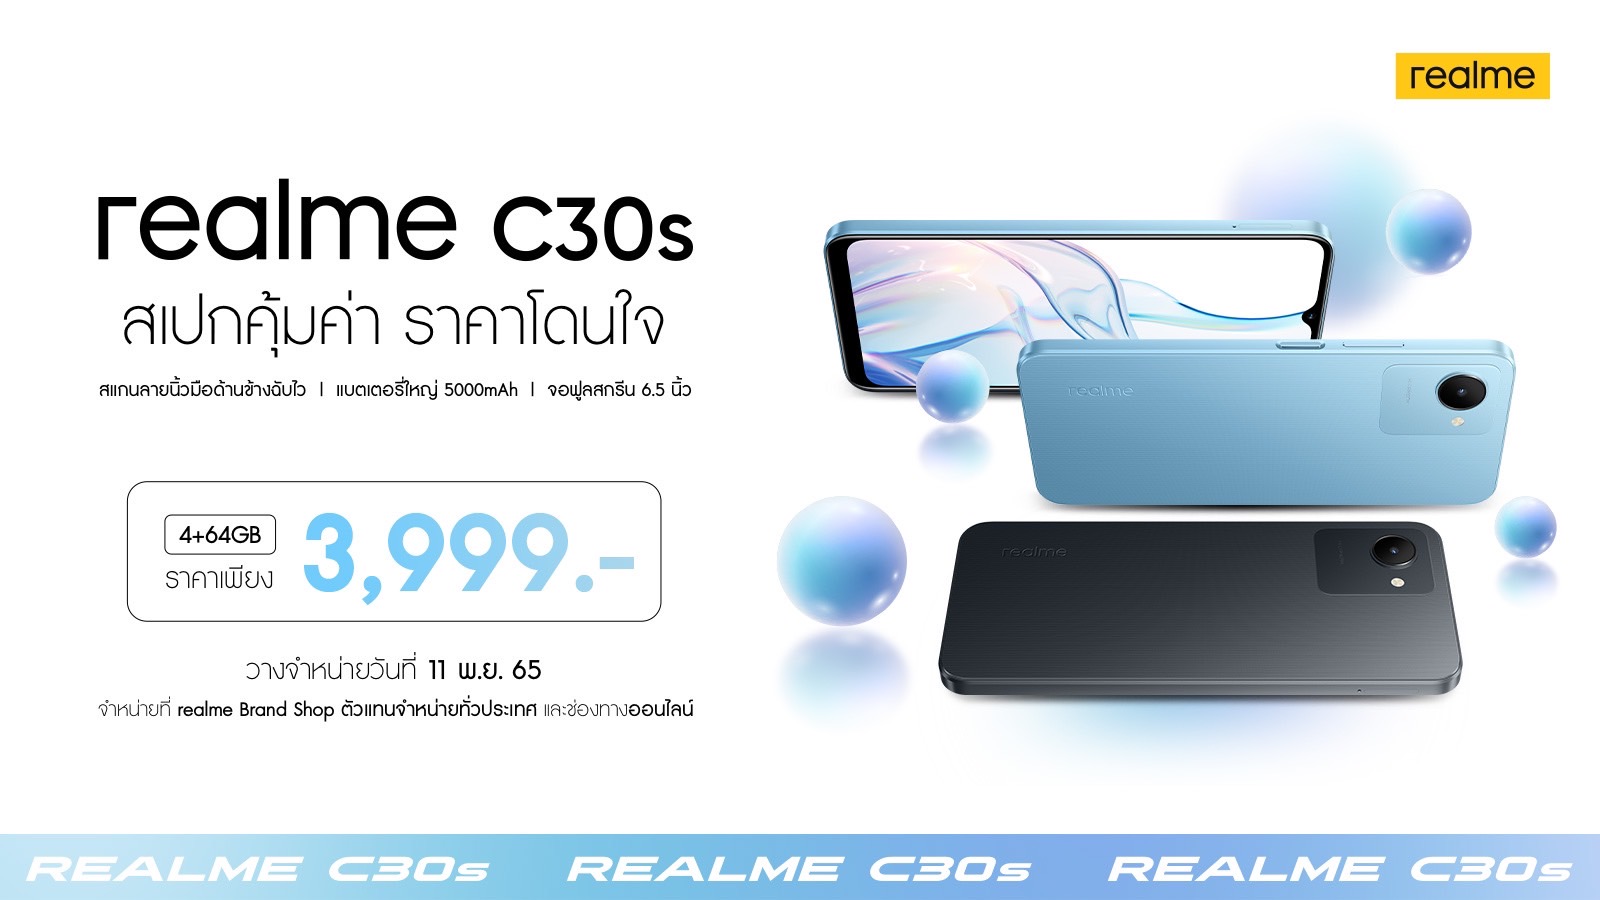 realme C30s เปิดตัวรุ่นอัปเกรดใหม่ จุใจกับหน่วยความจำ 4+64GB